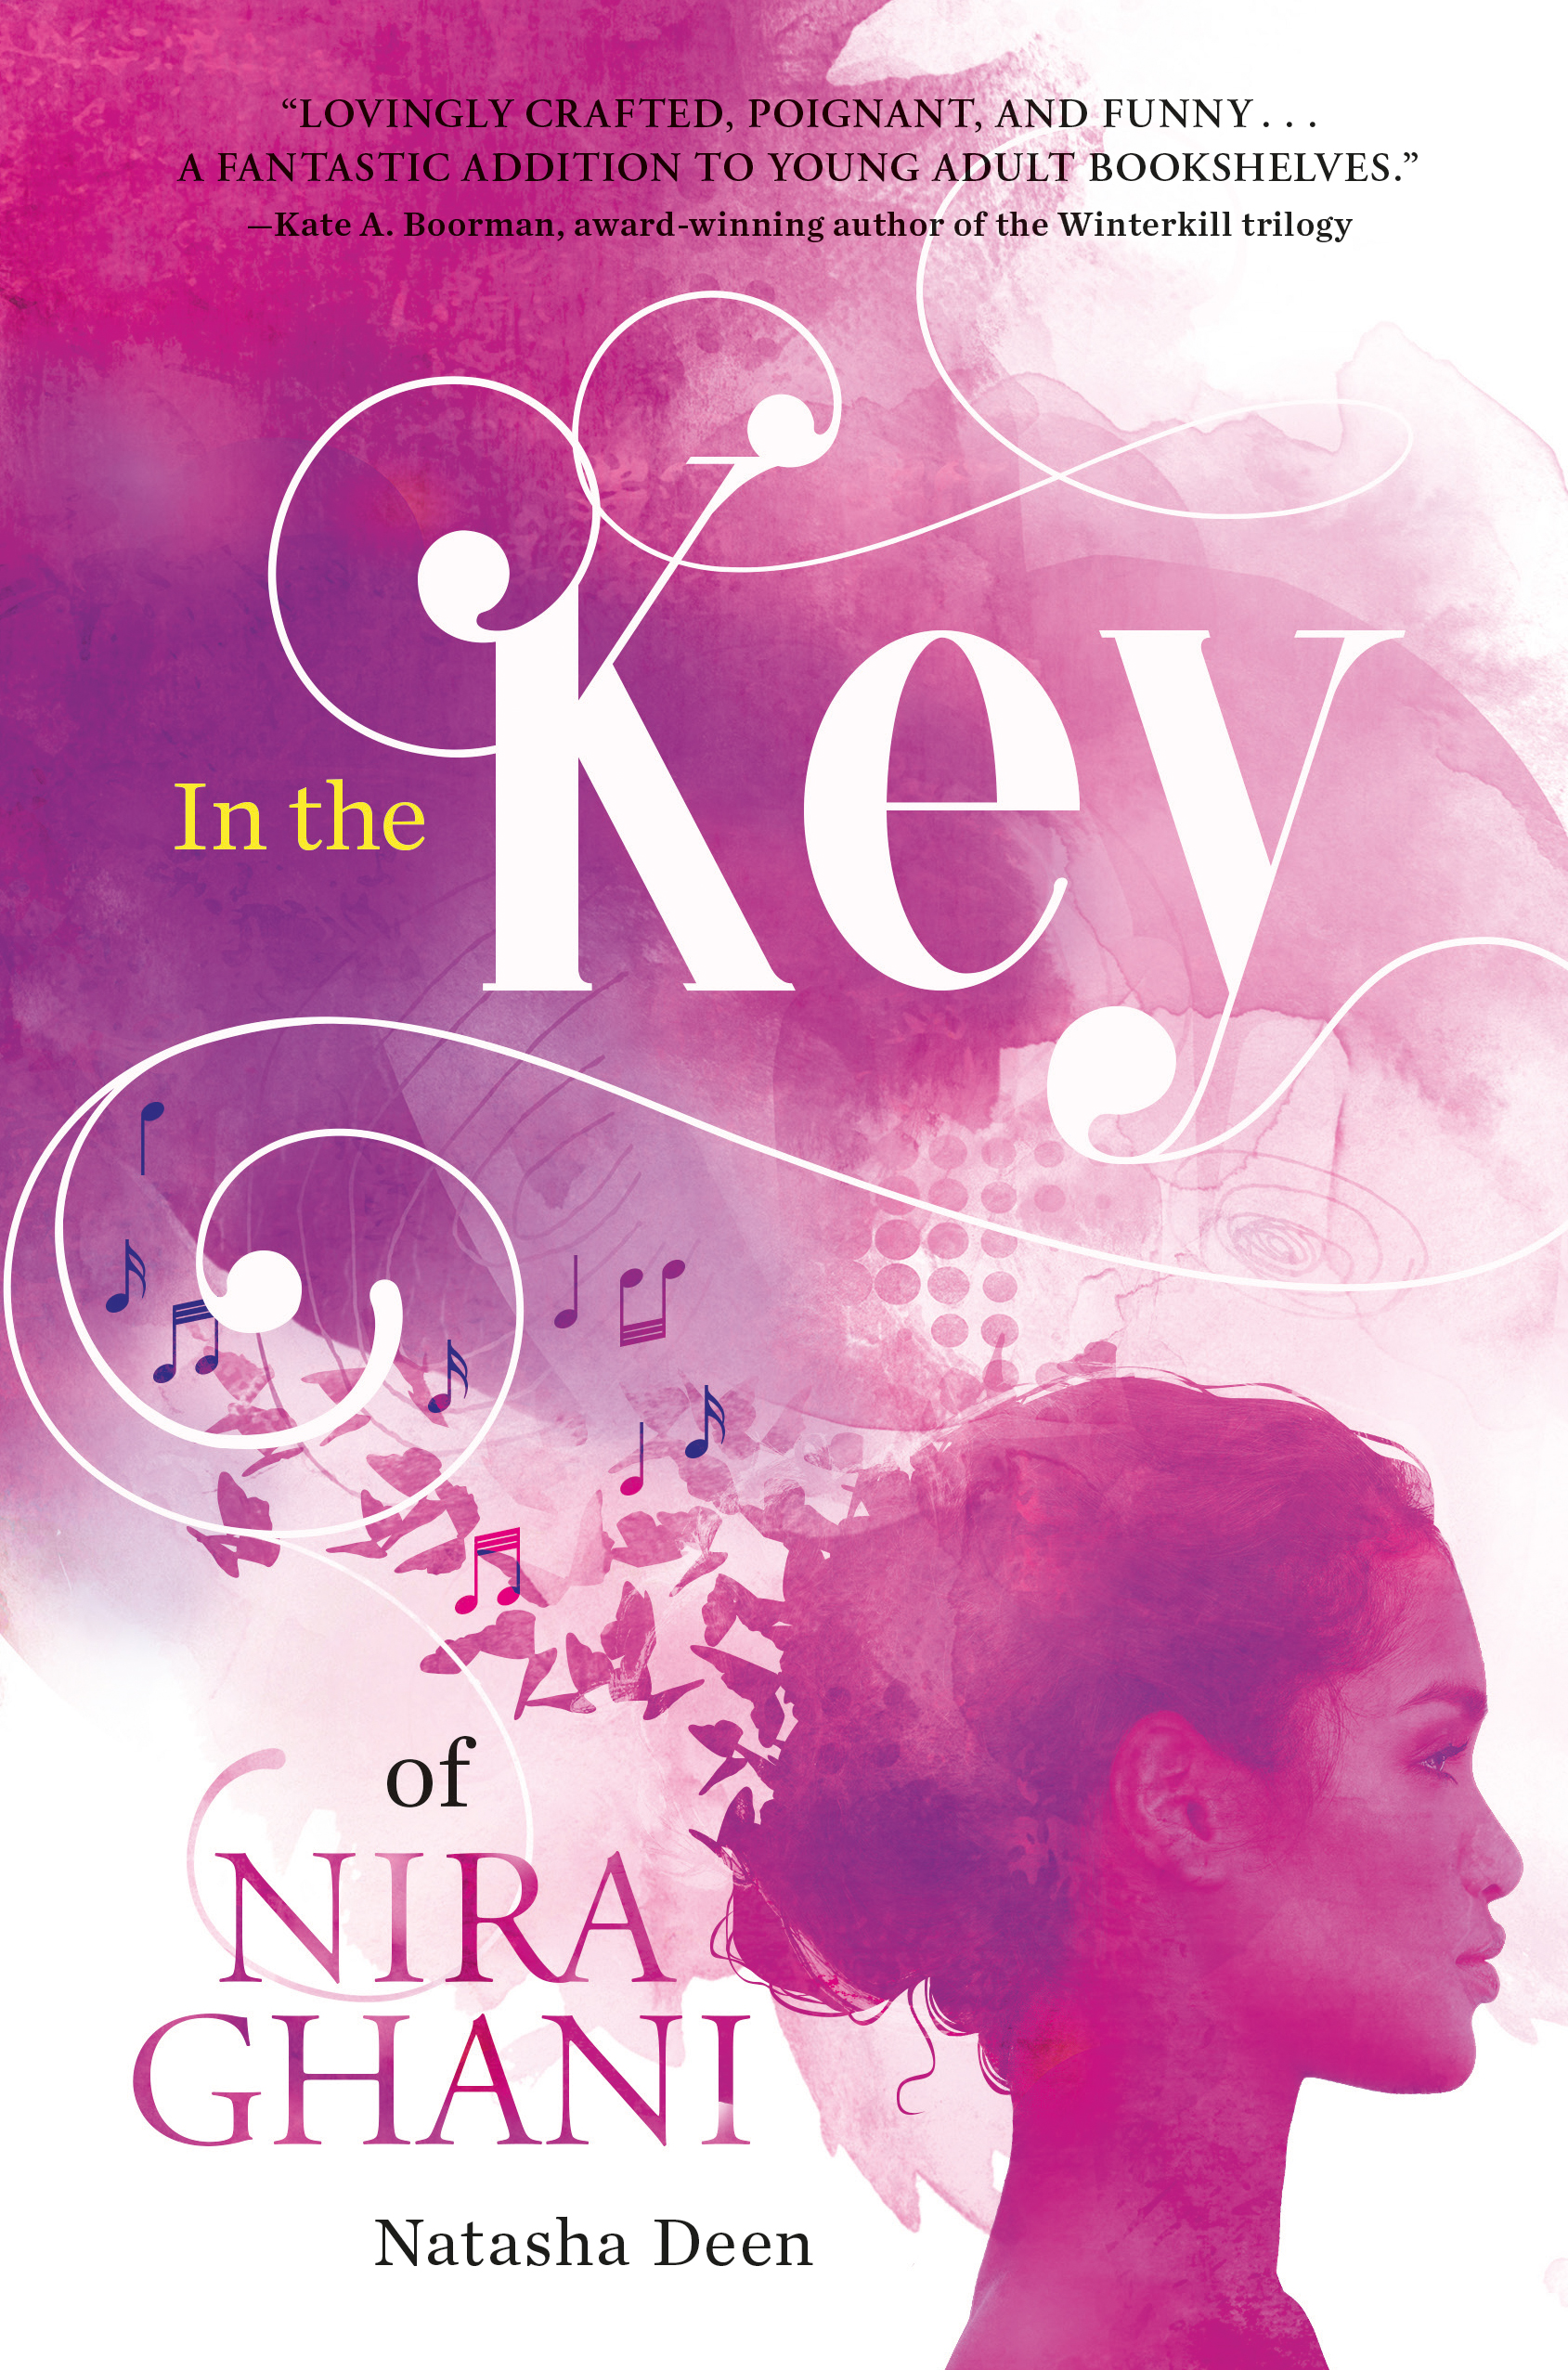 In The Key of Nira Ghani book cover